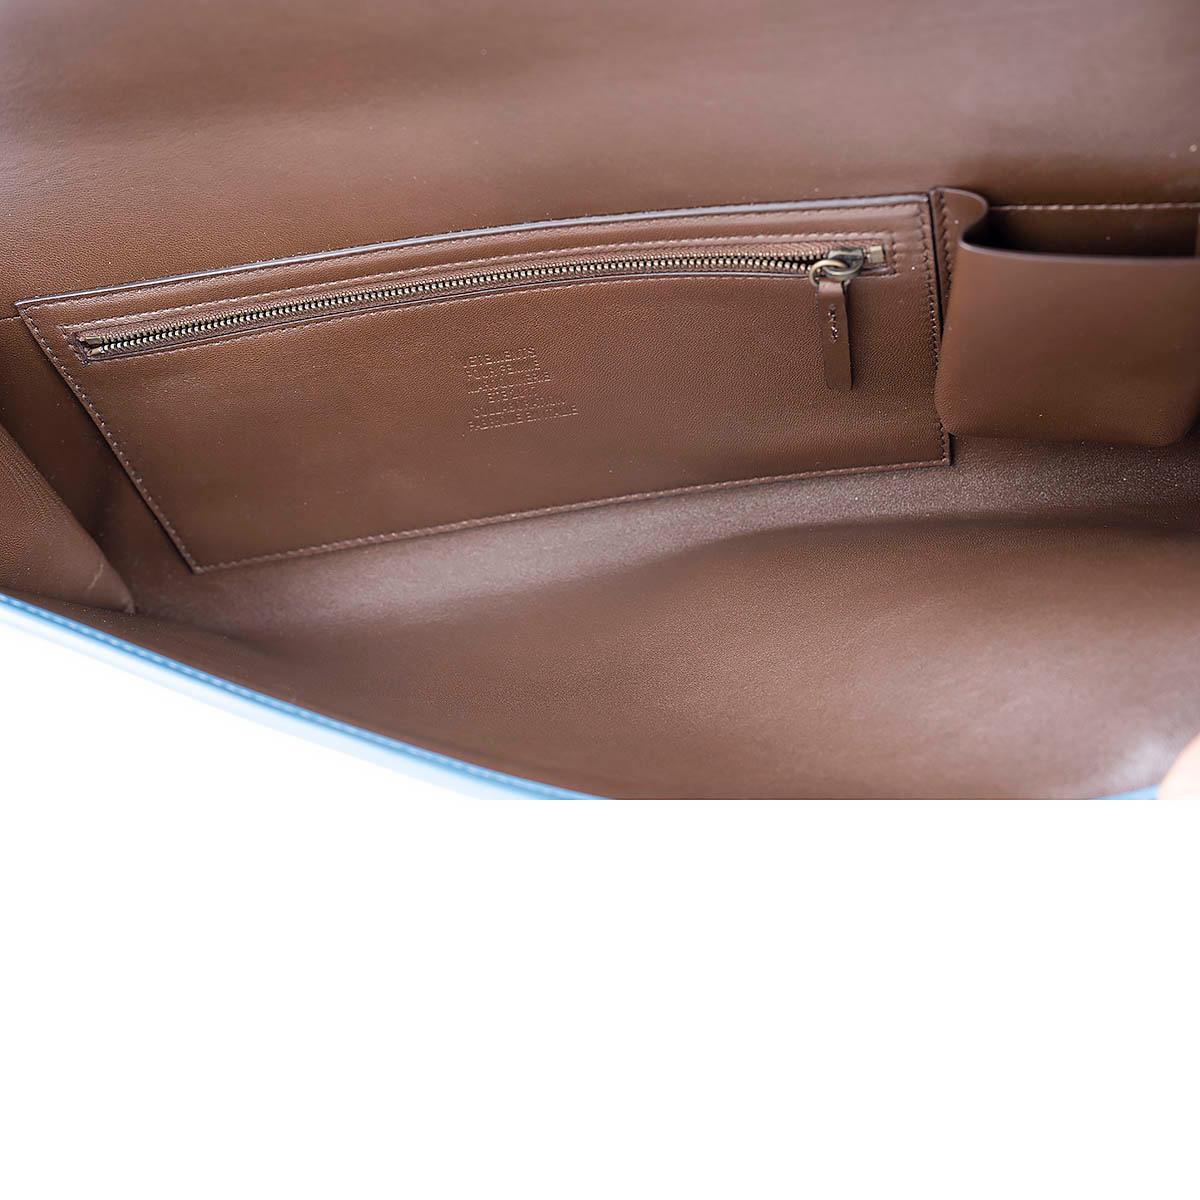 VETEMENTS x EASTPAK blue leather 2017 CHAIN Clutch Bag For Sale 1